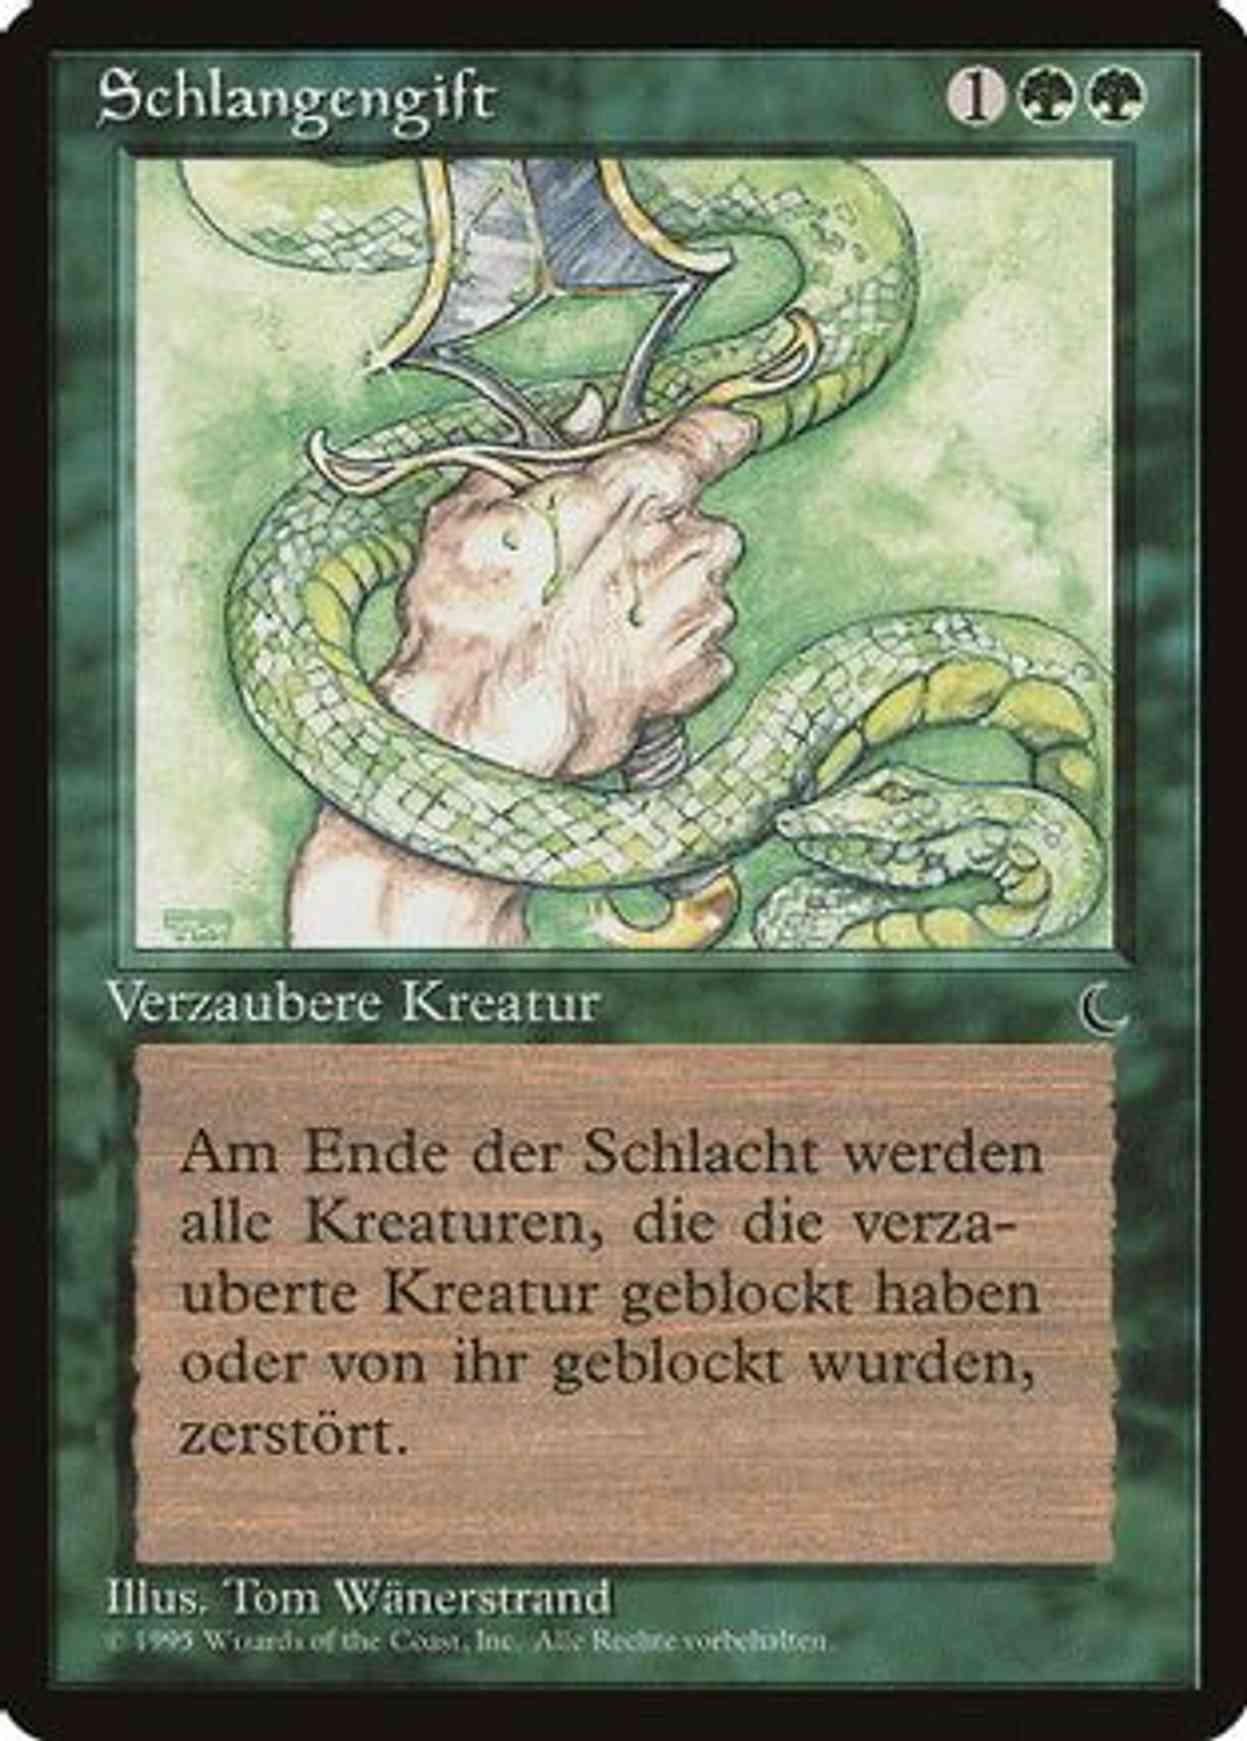 Venom (German) - "Schlangengift" magic card front